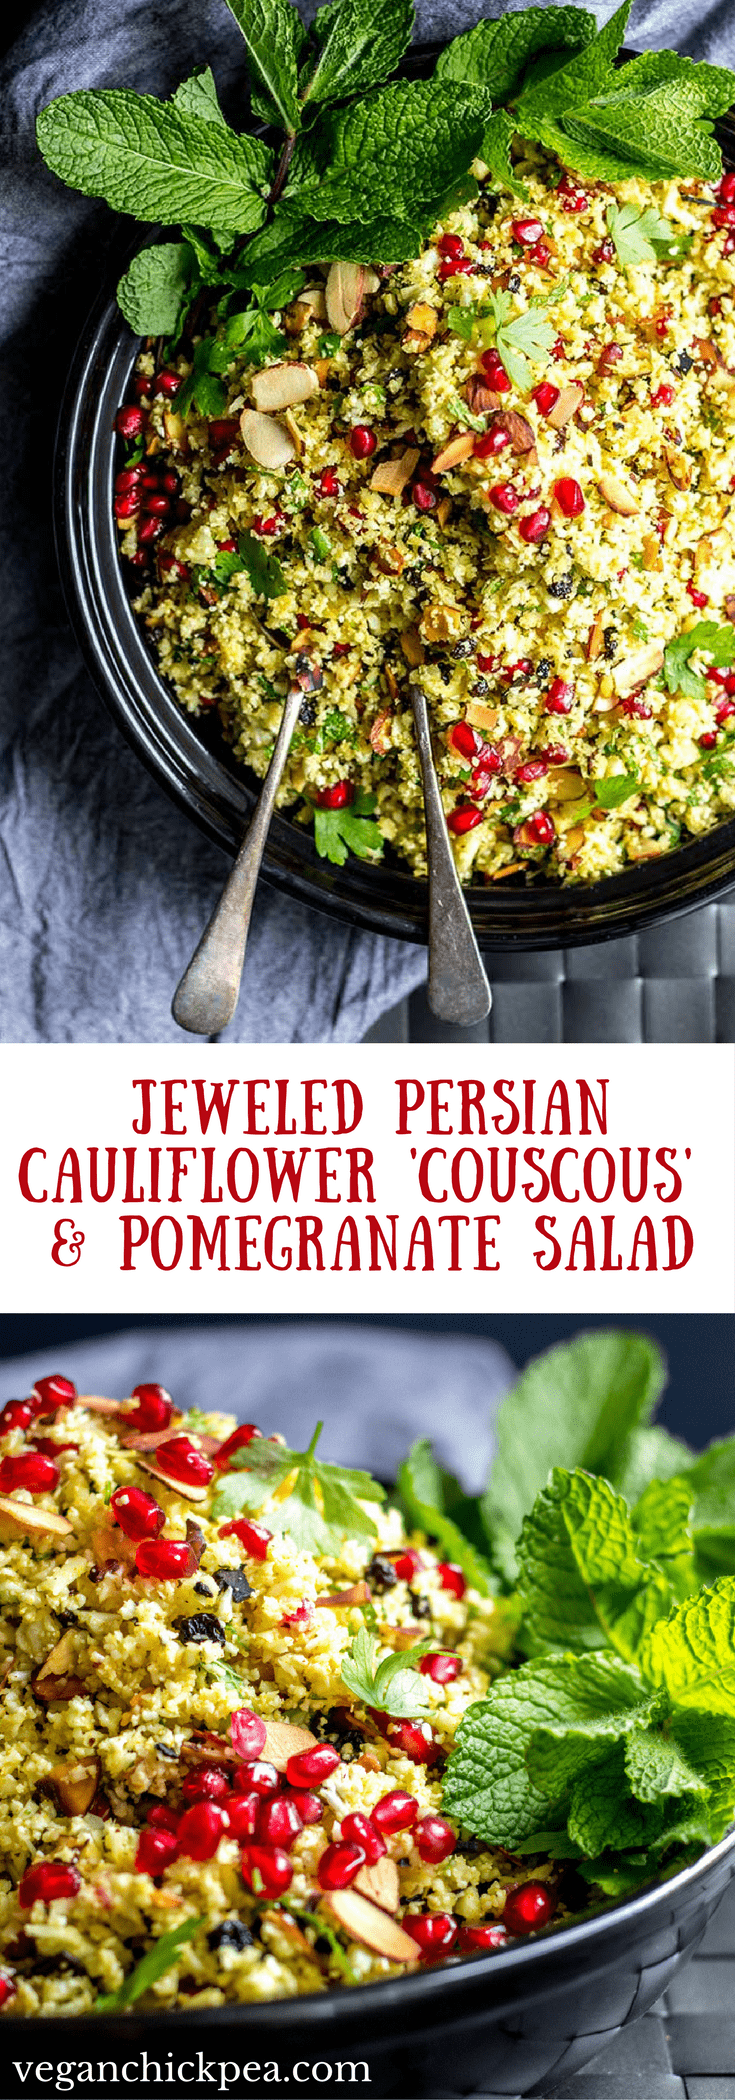 Jeweled Persian Cauliflower 'Couscous' & Pomegranate Salad | Vegan Chickpea